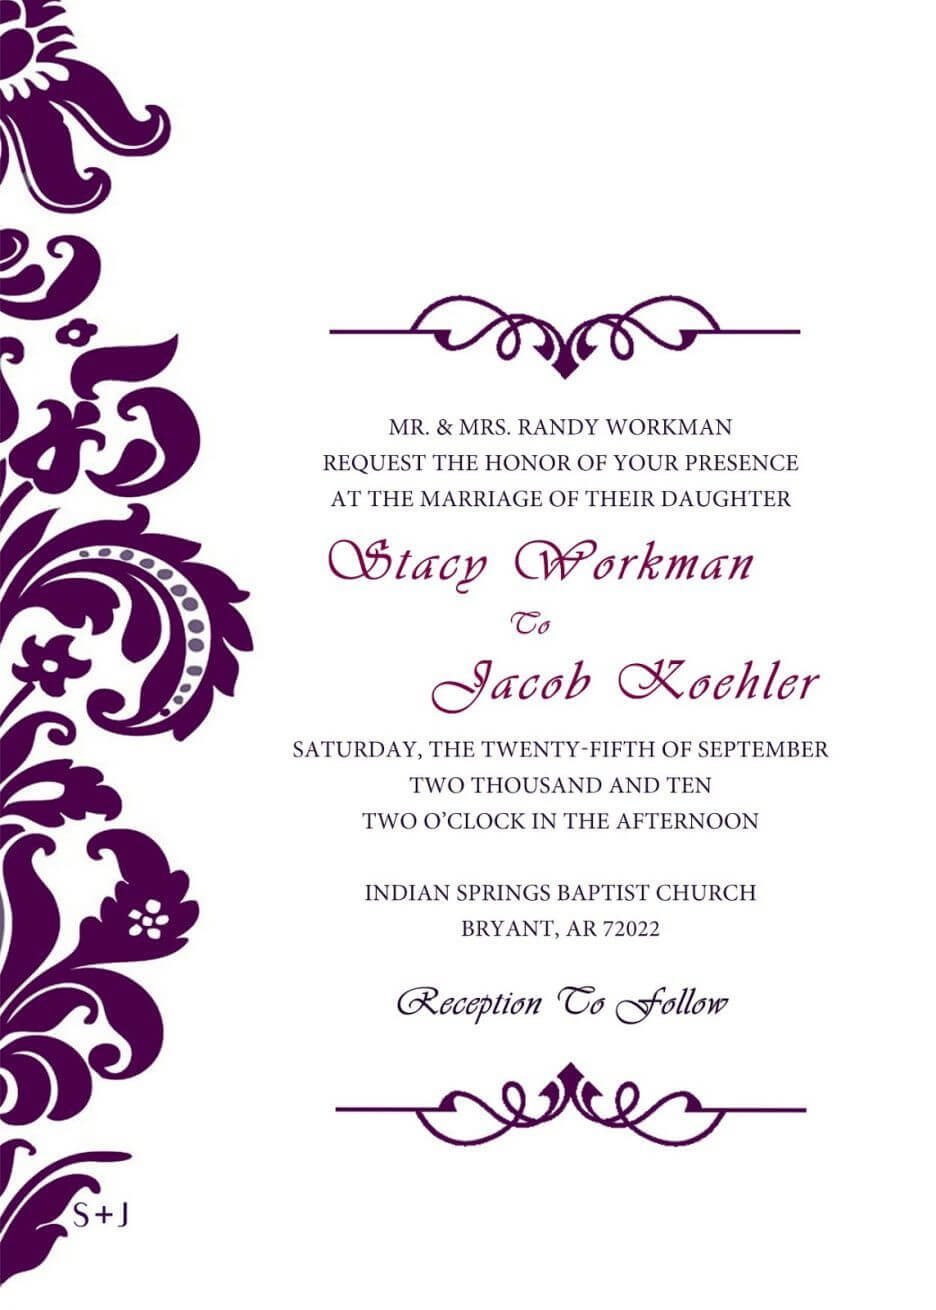 Neat And Simple | Free Wedding Invitation Templates, Free Inside Church Wedding Invitation Card Template